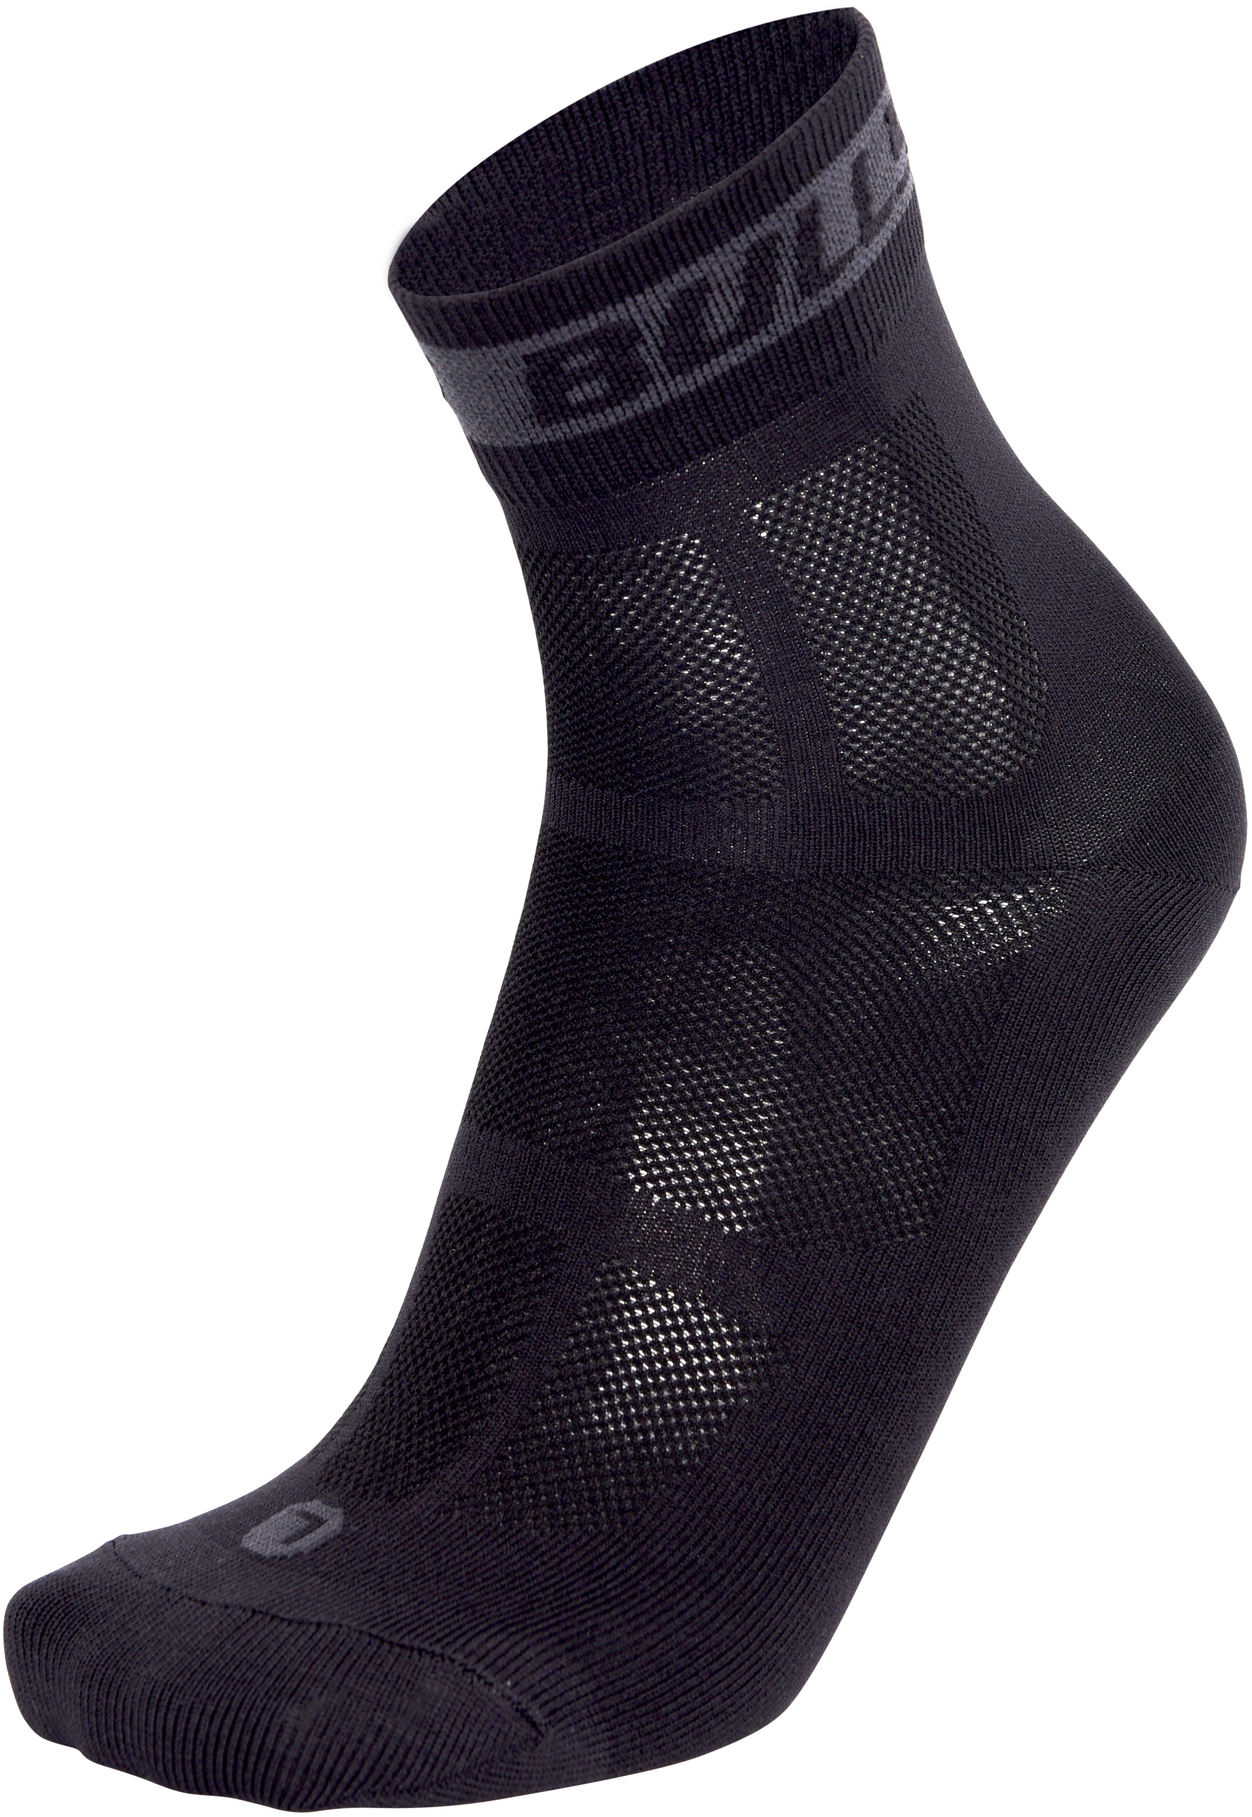 BULLS Socken Long 43-47 black